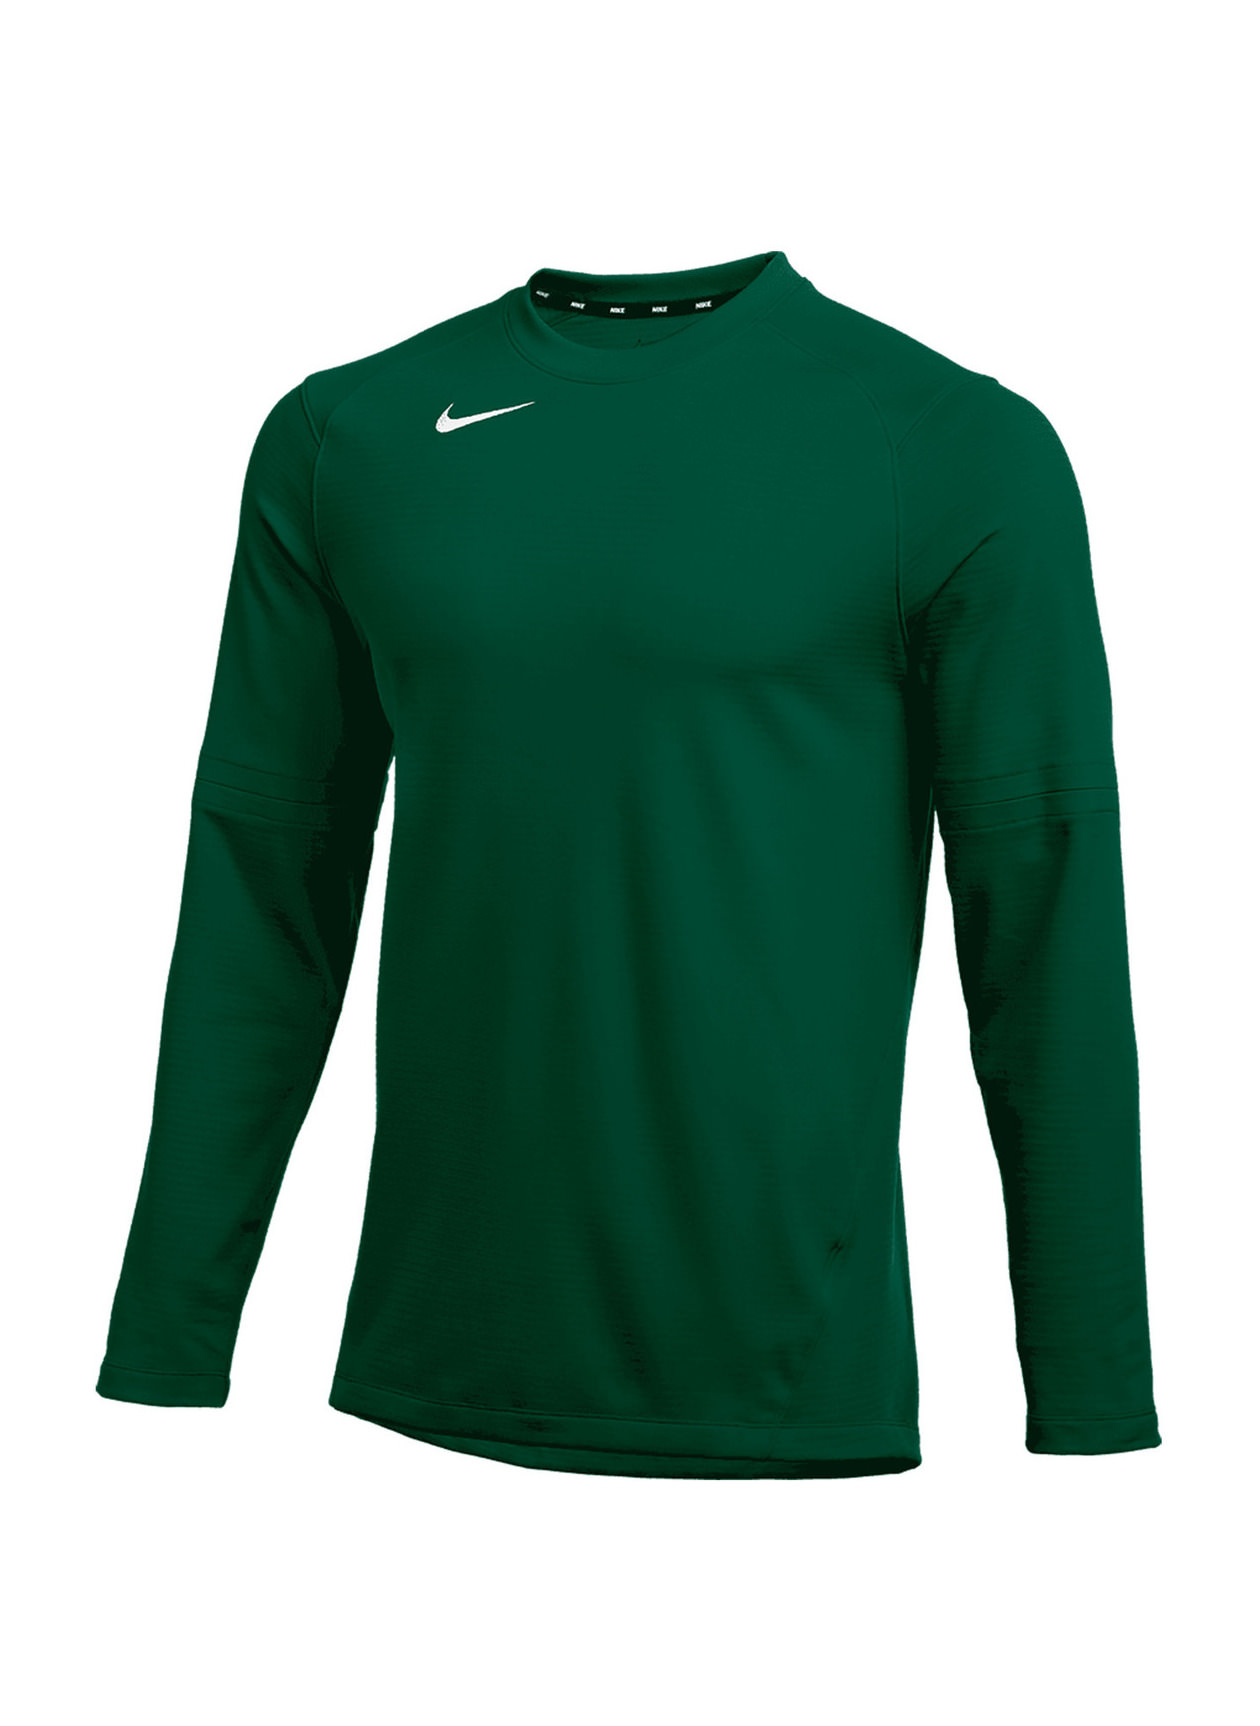 Green Printed Full Sleeves Shirt